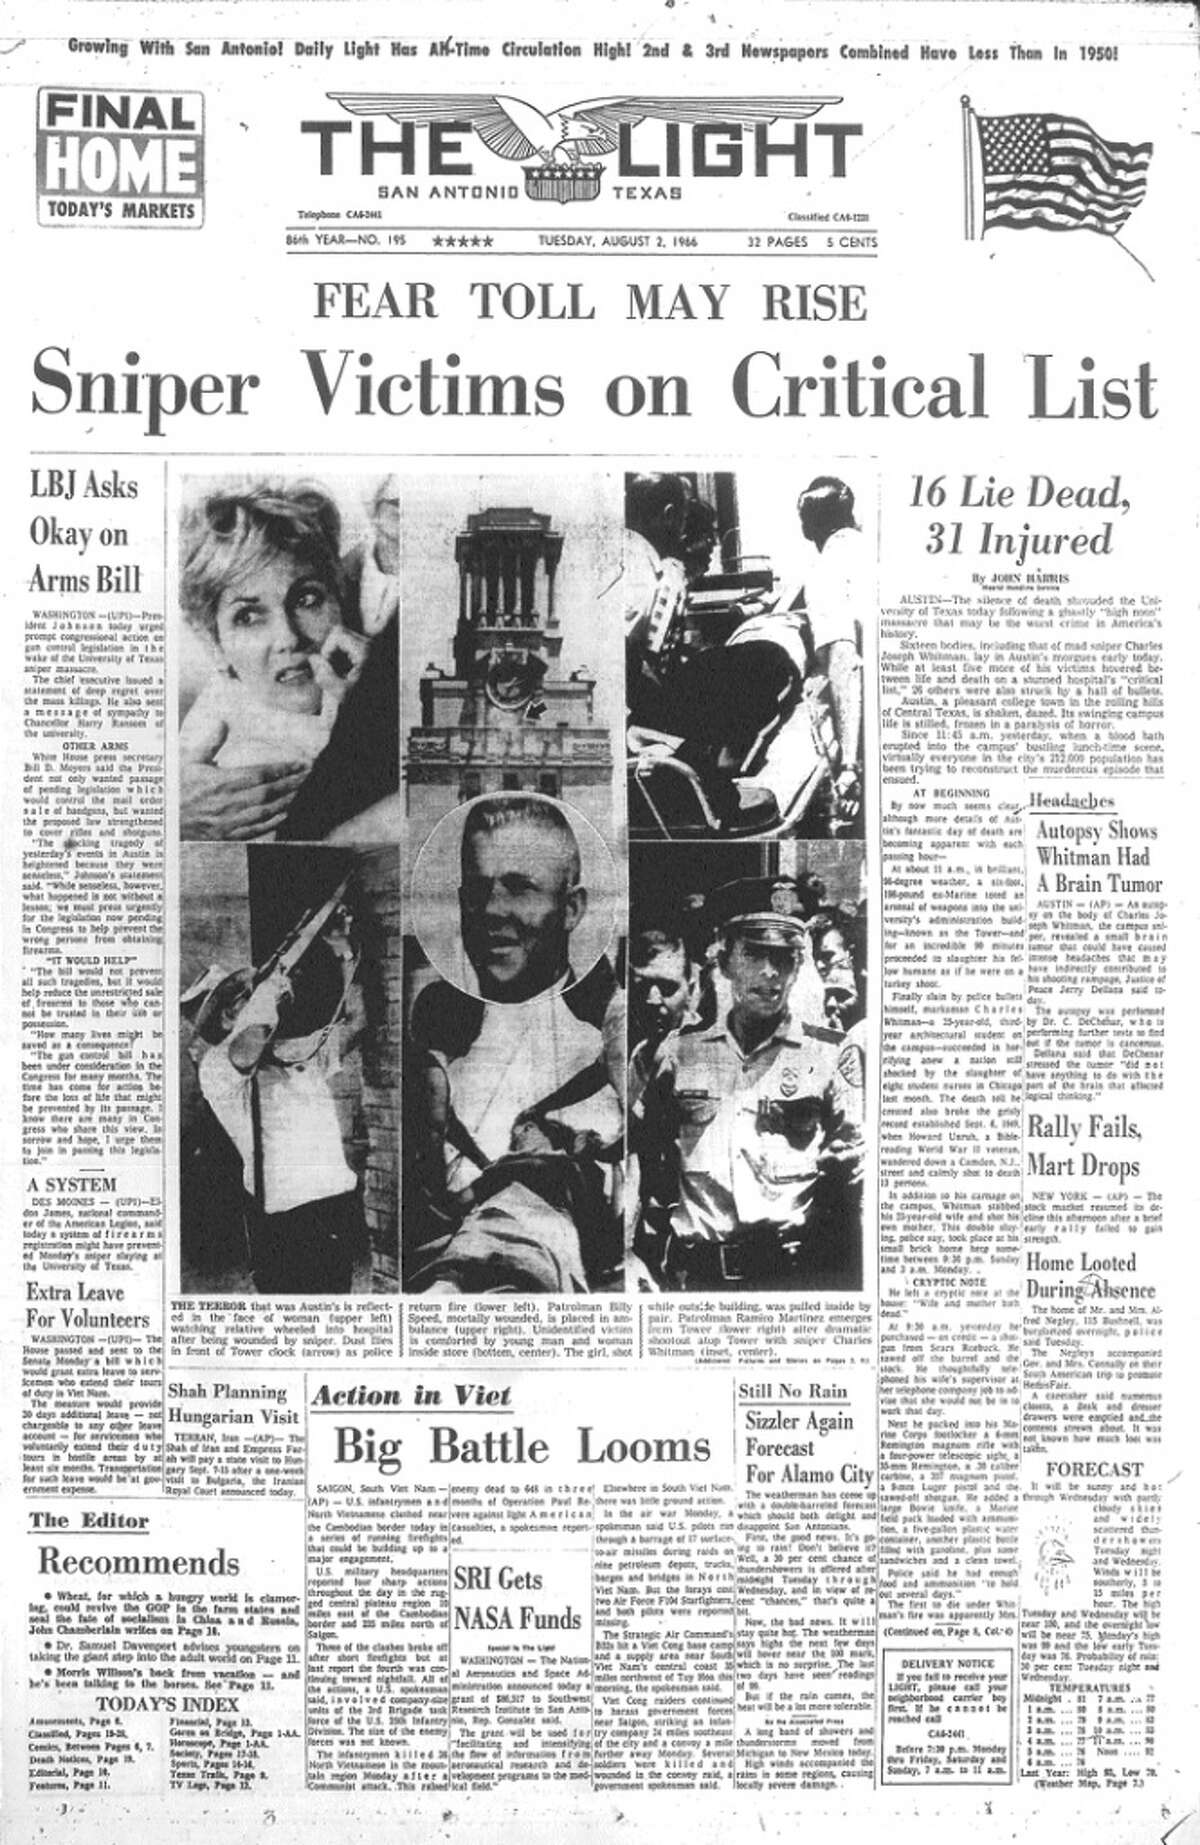 August 1, 1966 The University of Texas at Austin Austin, Texas  Killed: 14 Injured: 32